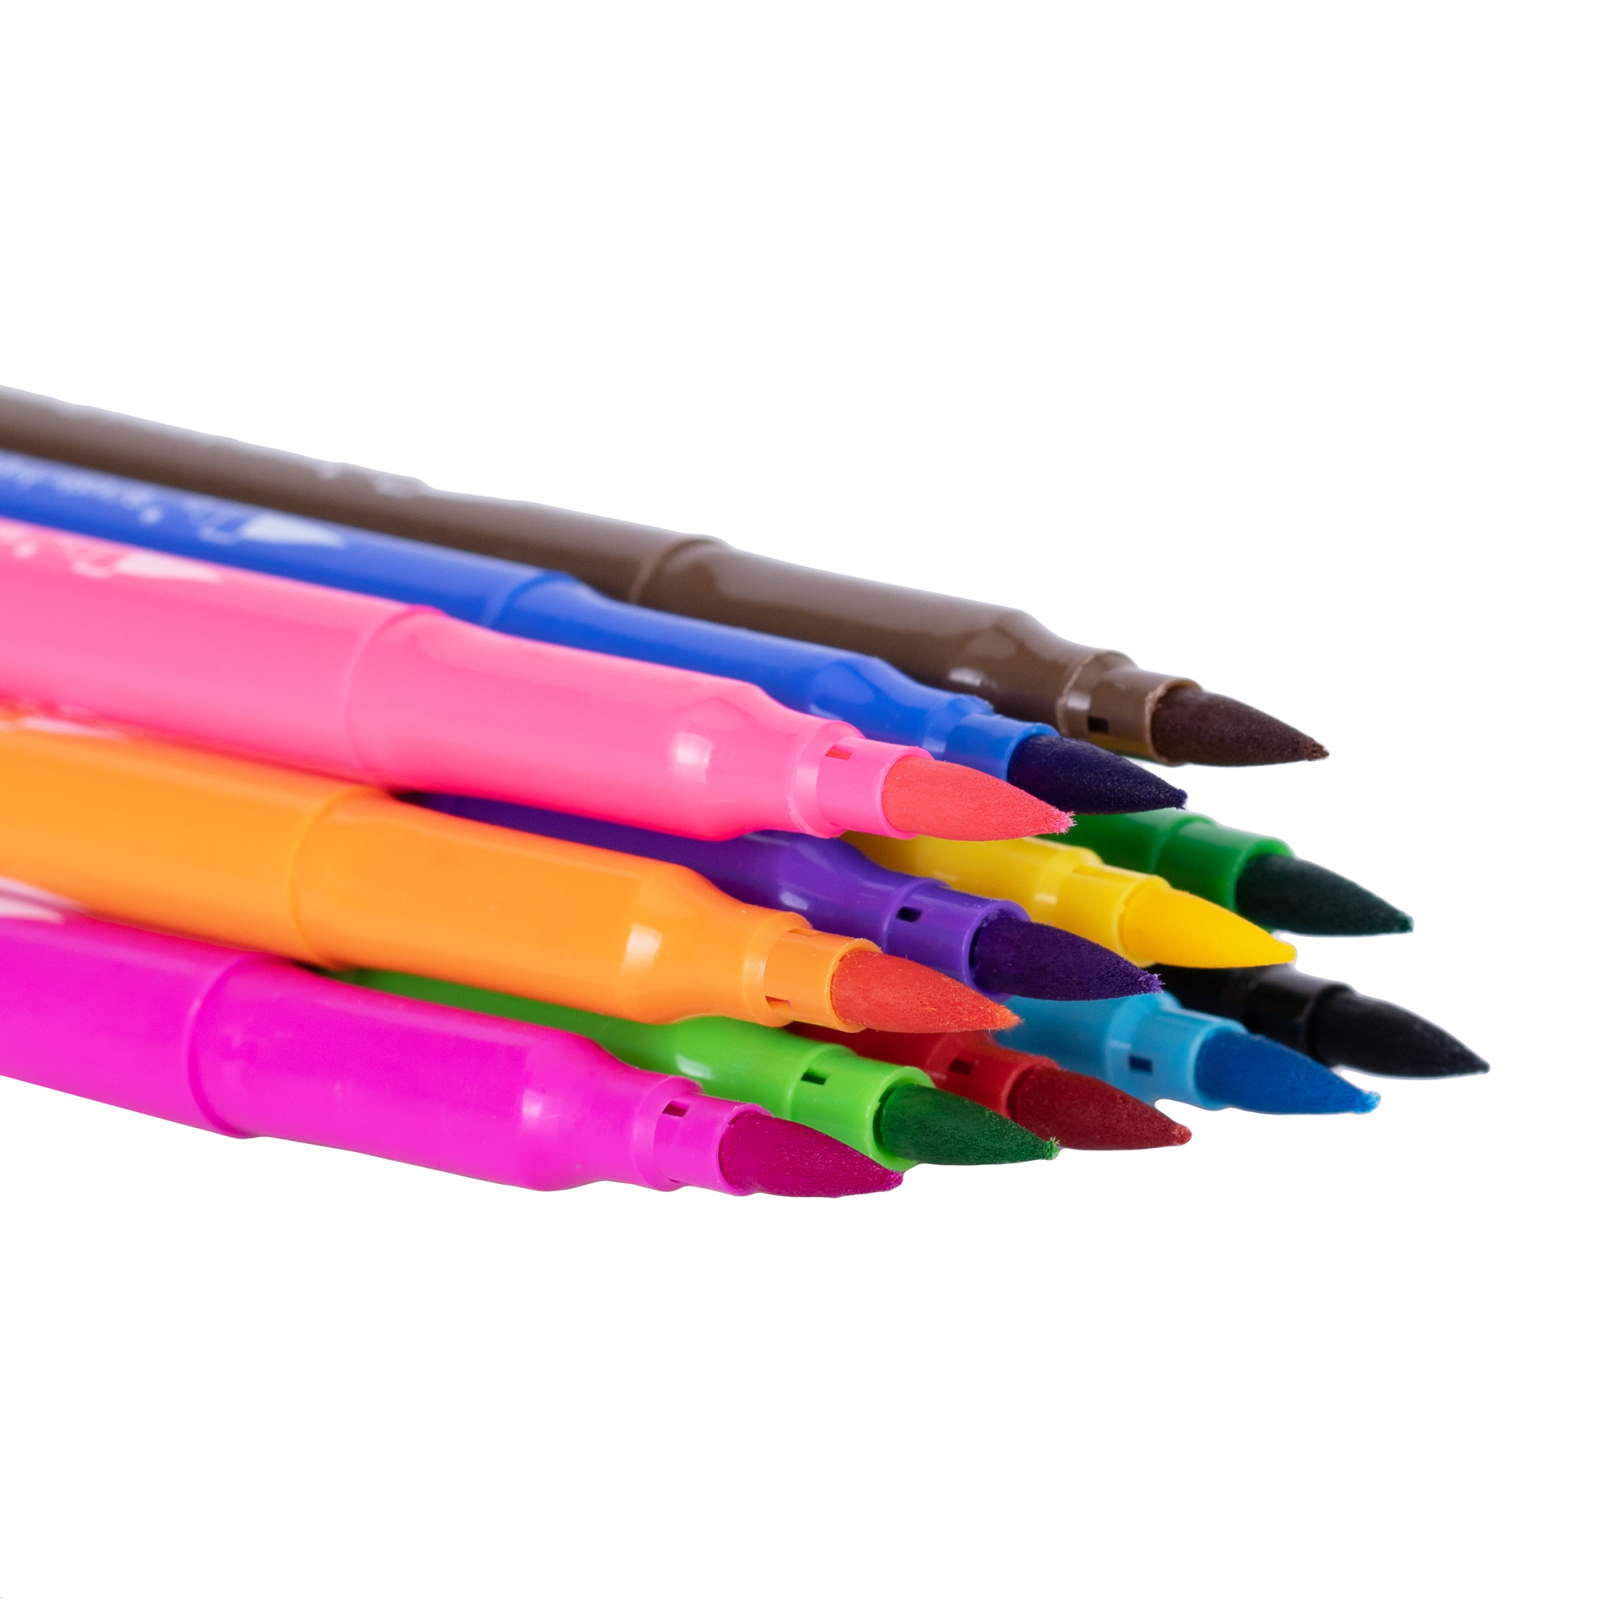 Фломастеры Maxi кисточки BRUSH-TIPPED, 12 цветов, линия 2-5 мм (MX15233) изображение 4